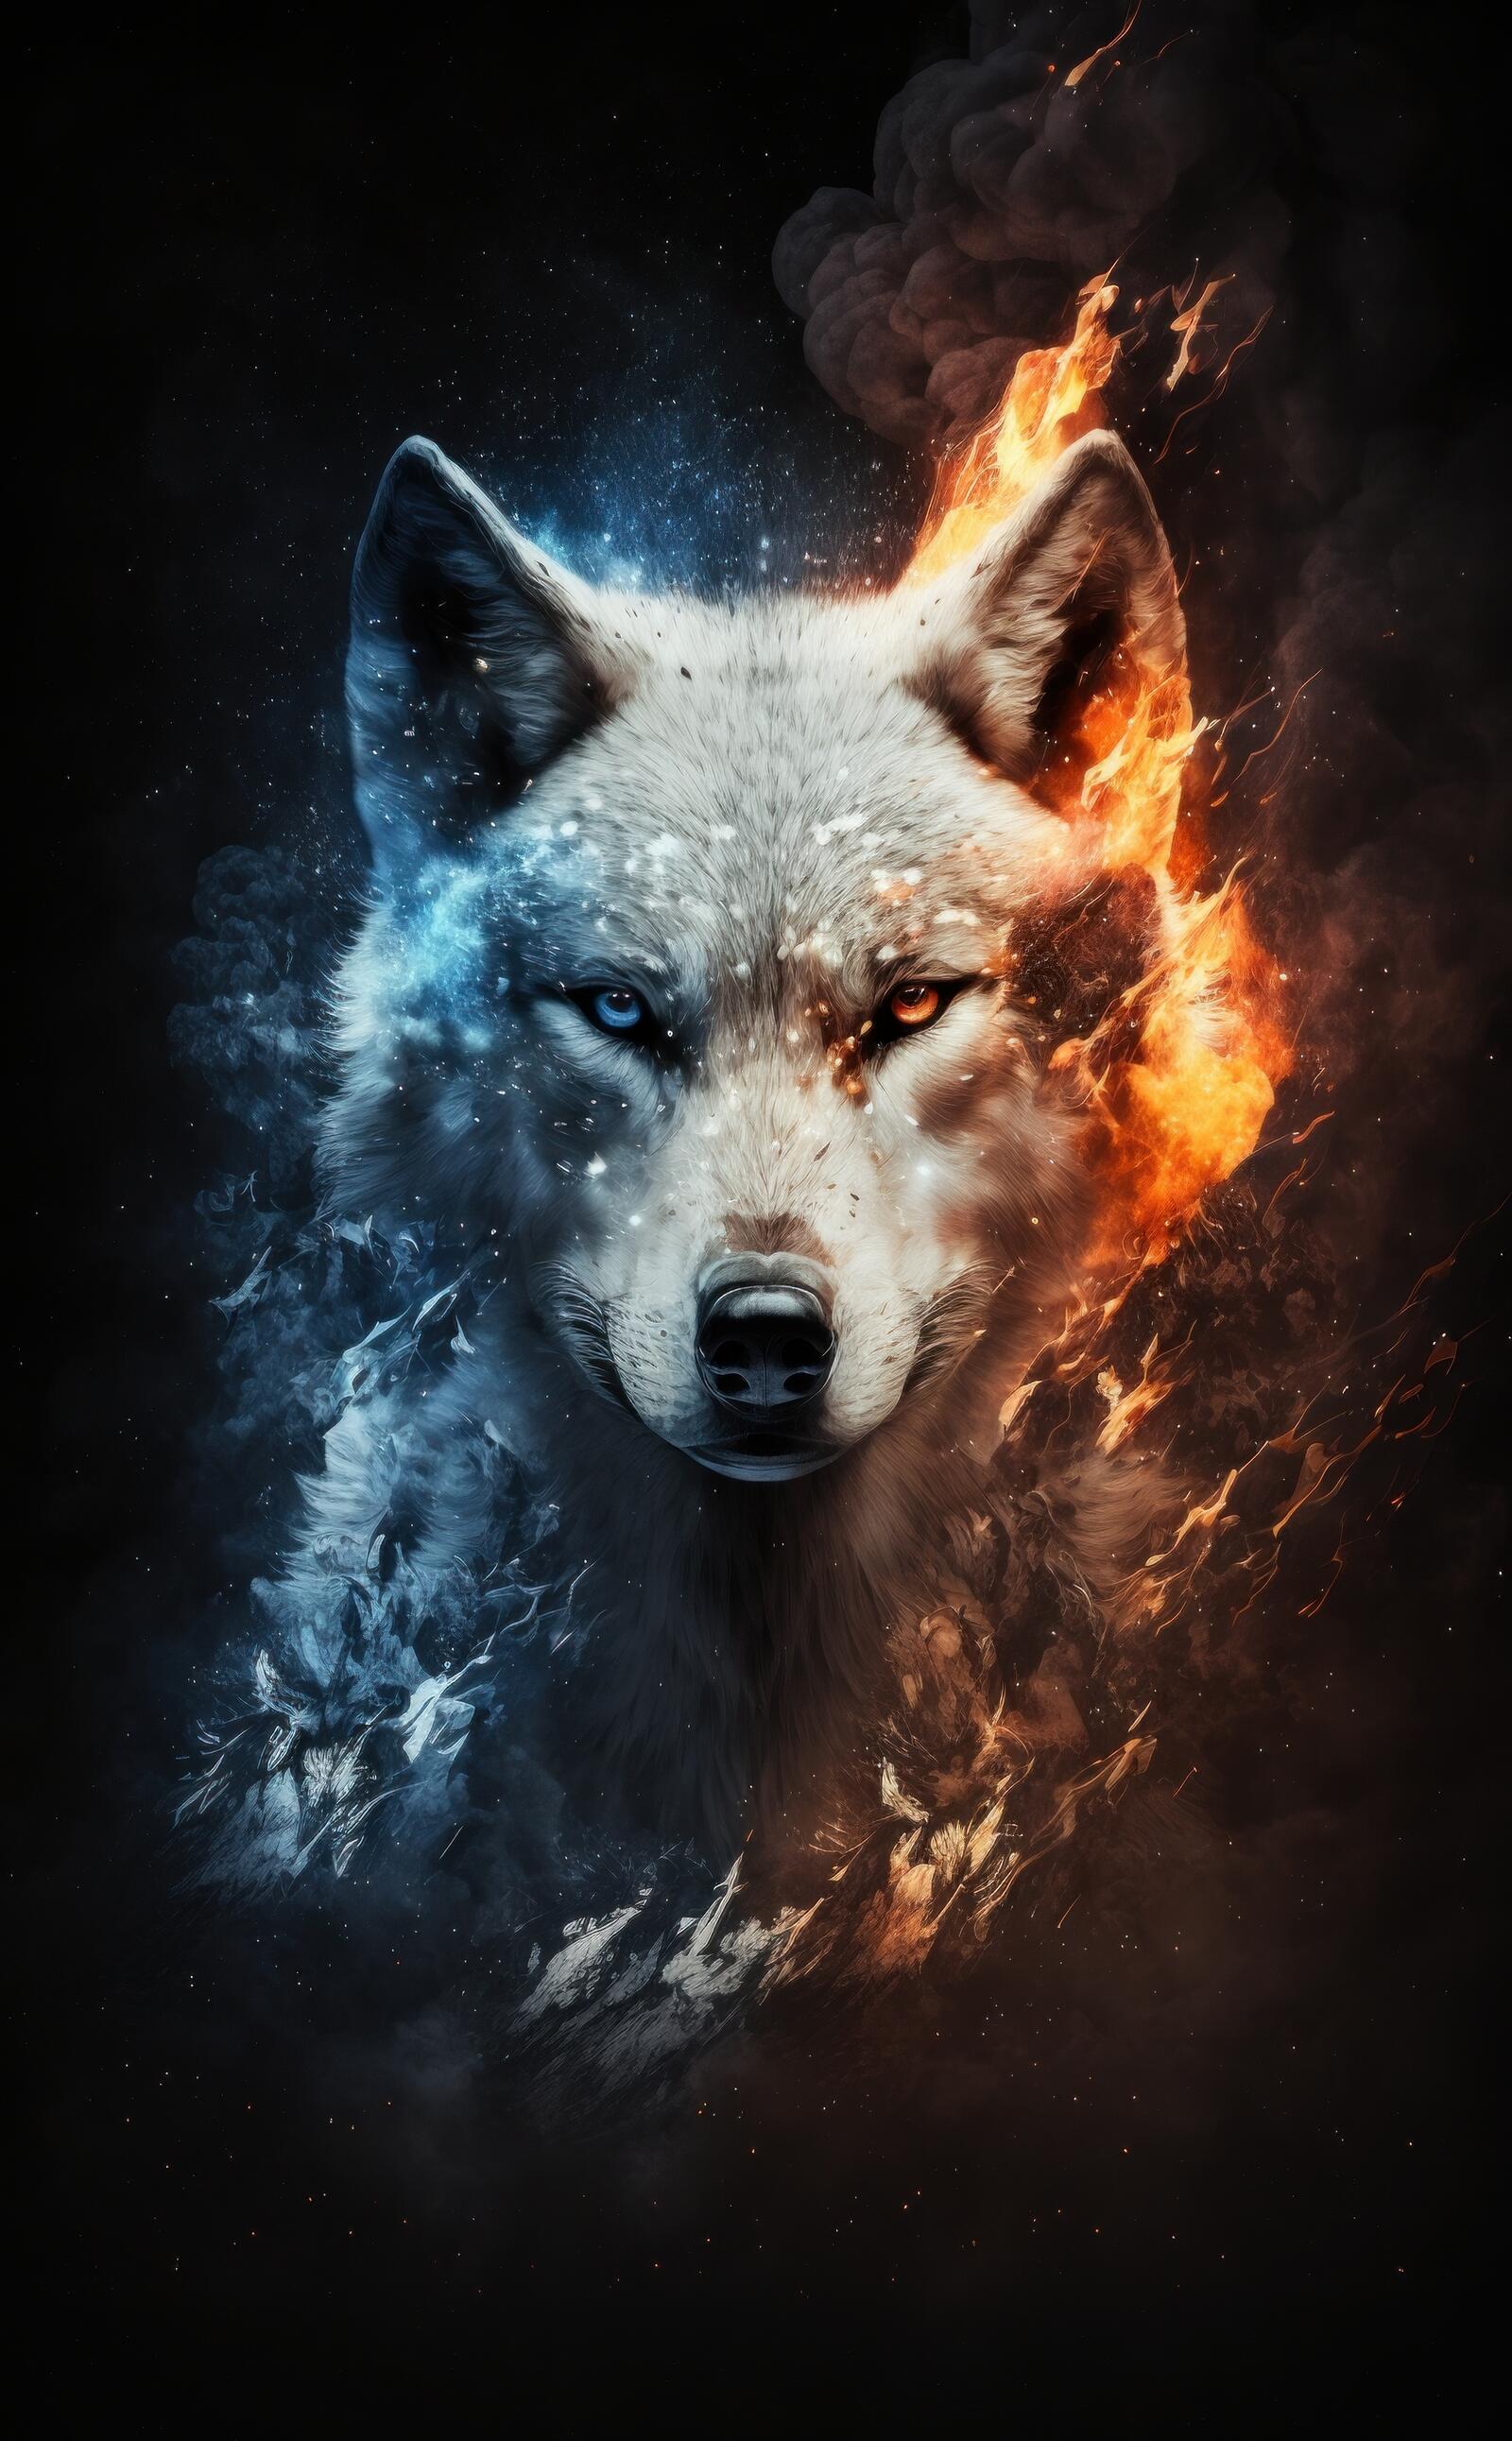 Бесплатное фото Рендеринг картинка белого волка